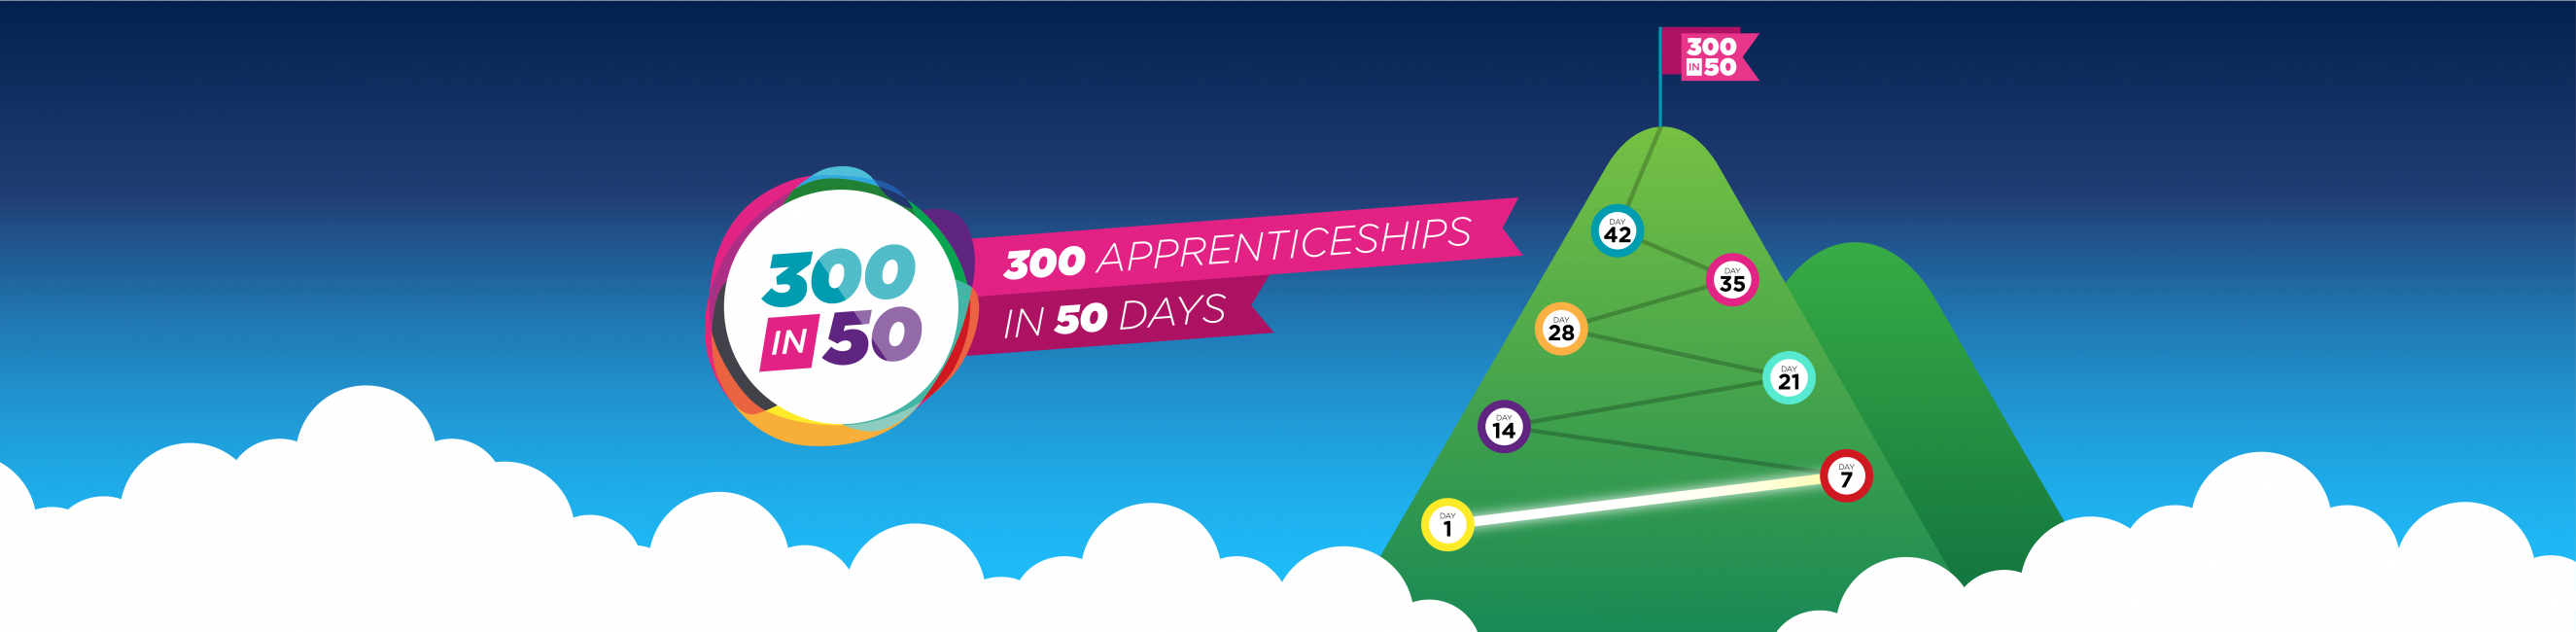 300 apprenticeships in 50 days graphic 